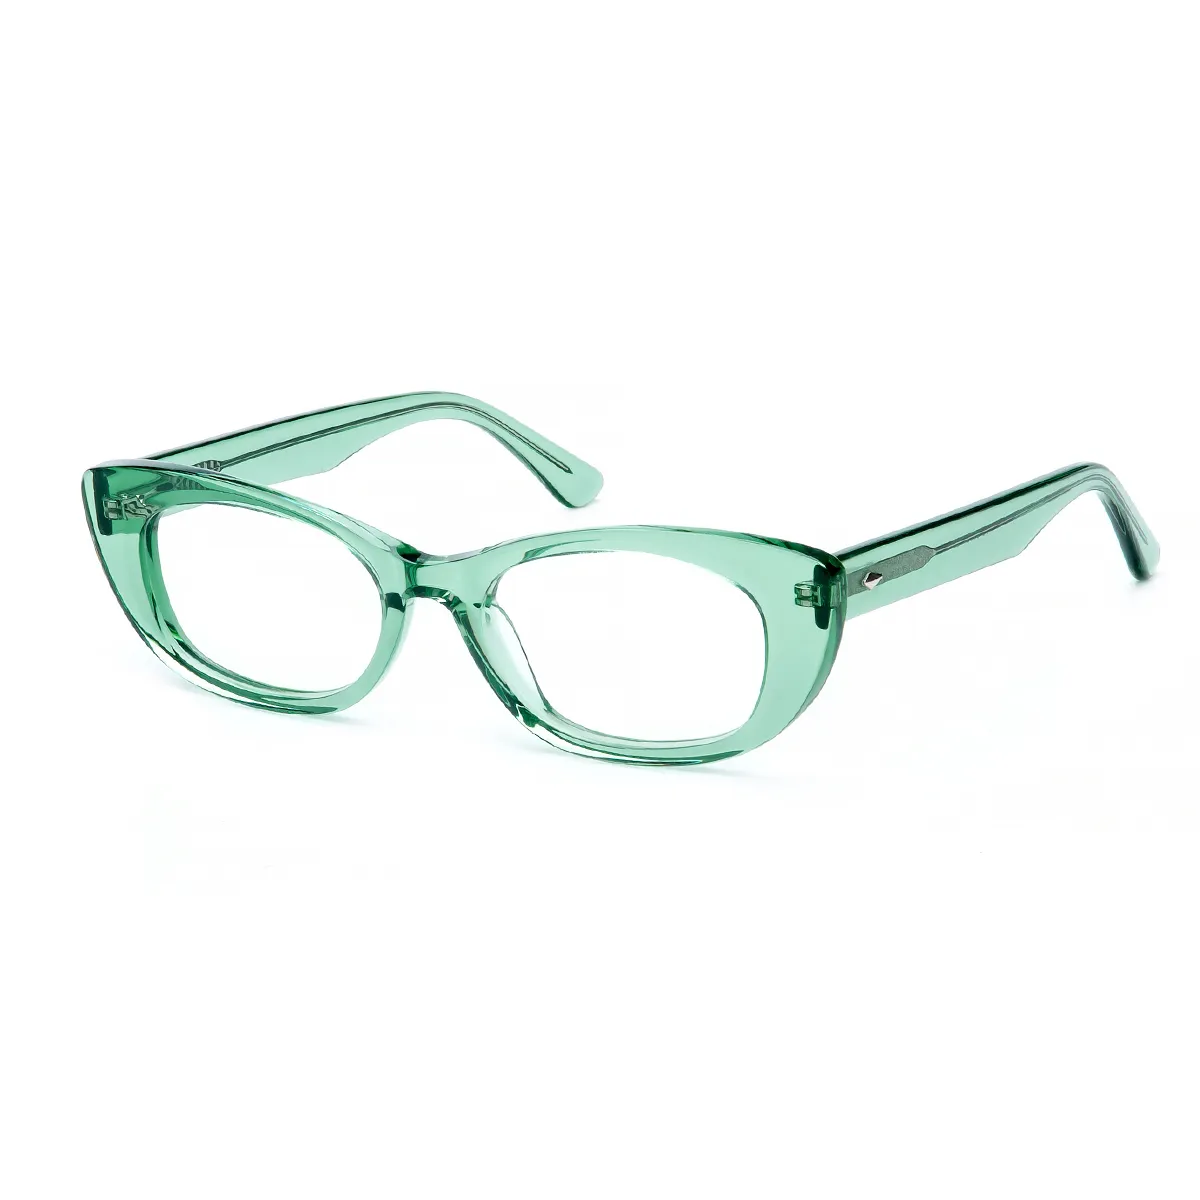 Lily - Cat-eye Translucent Green Glasses for Women - EFE